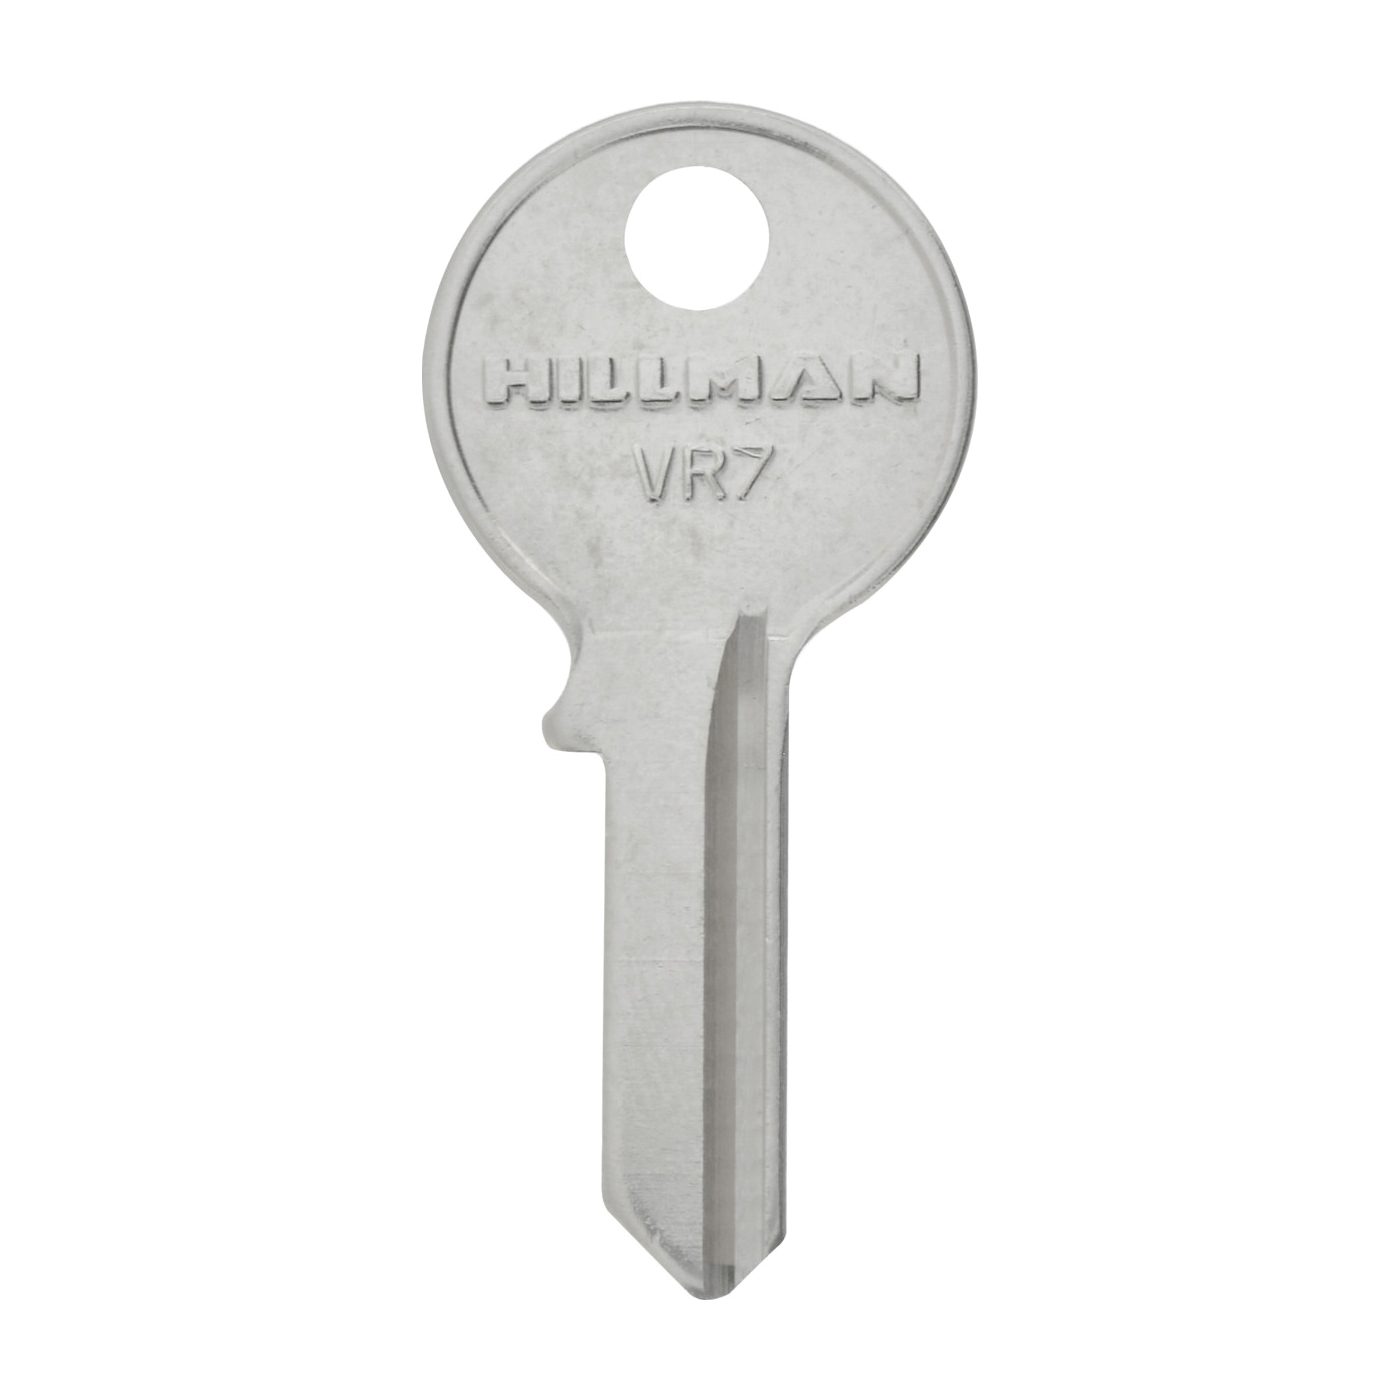 Hillman 441460 Key, For: Viro Locks